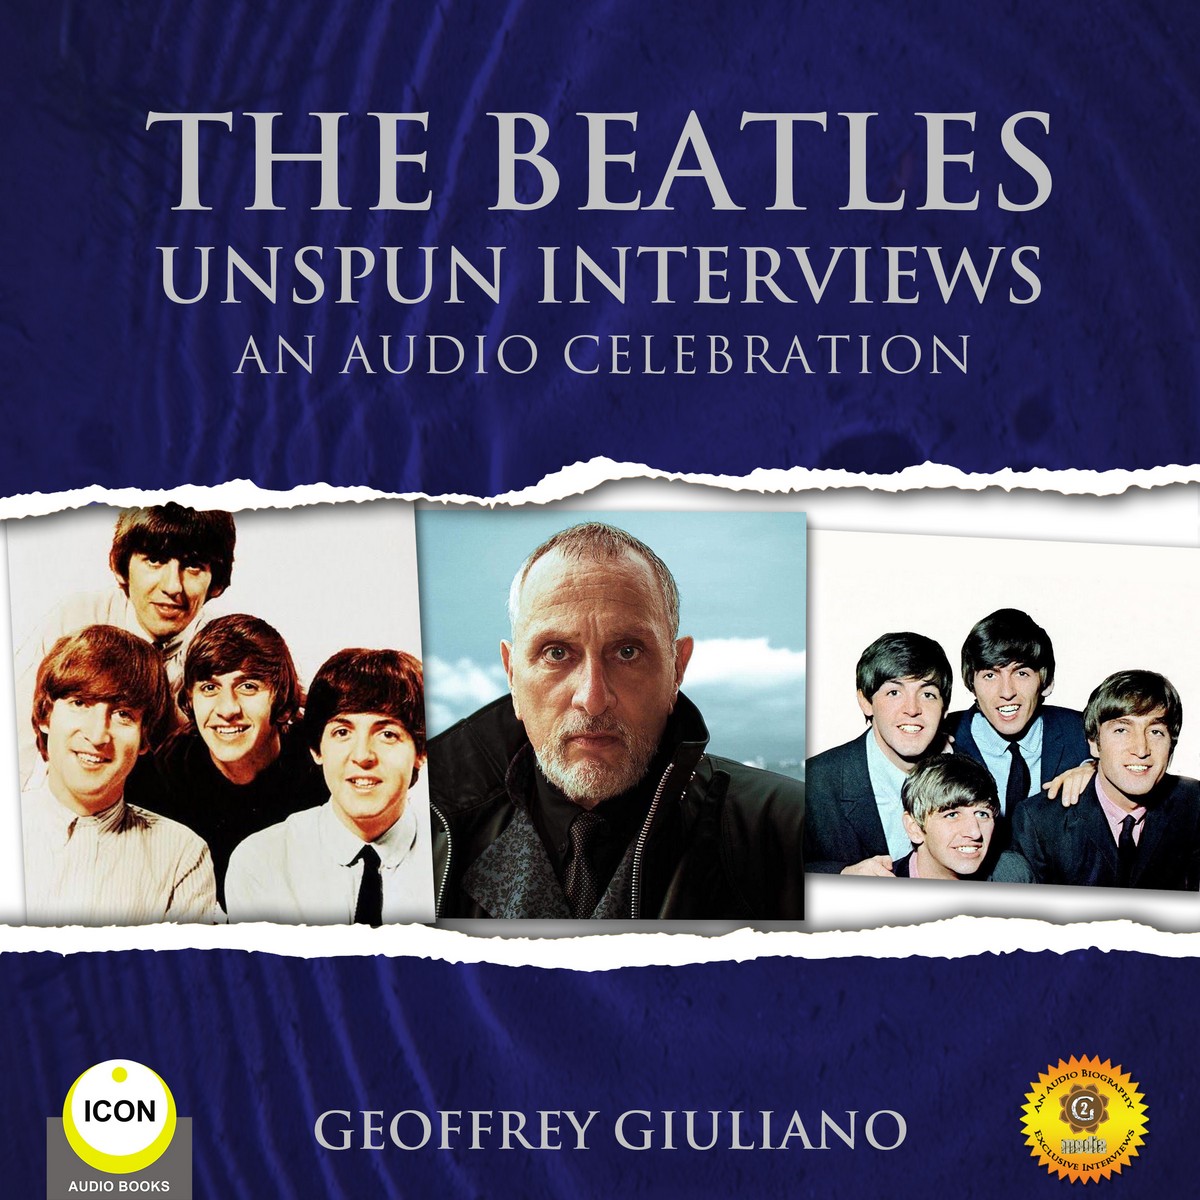 The Beatles Unspun Interviews – An Audio Celebration